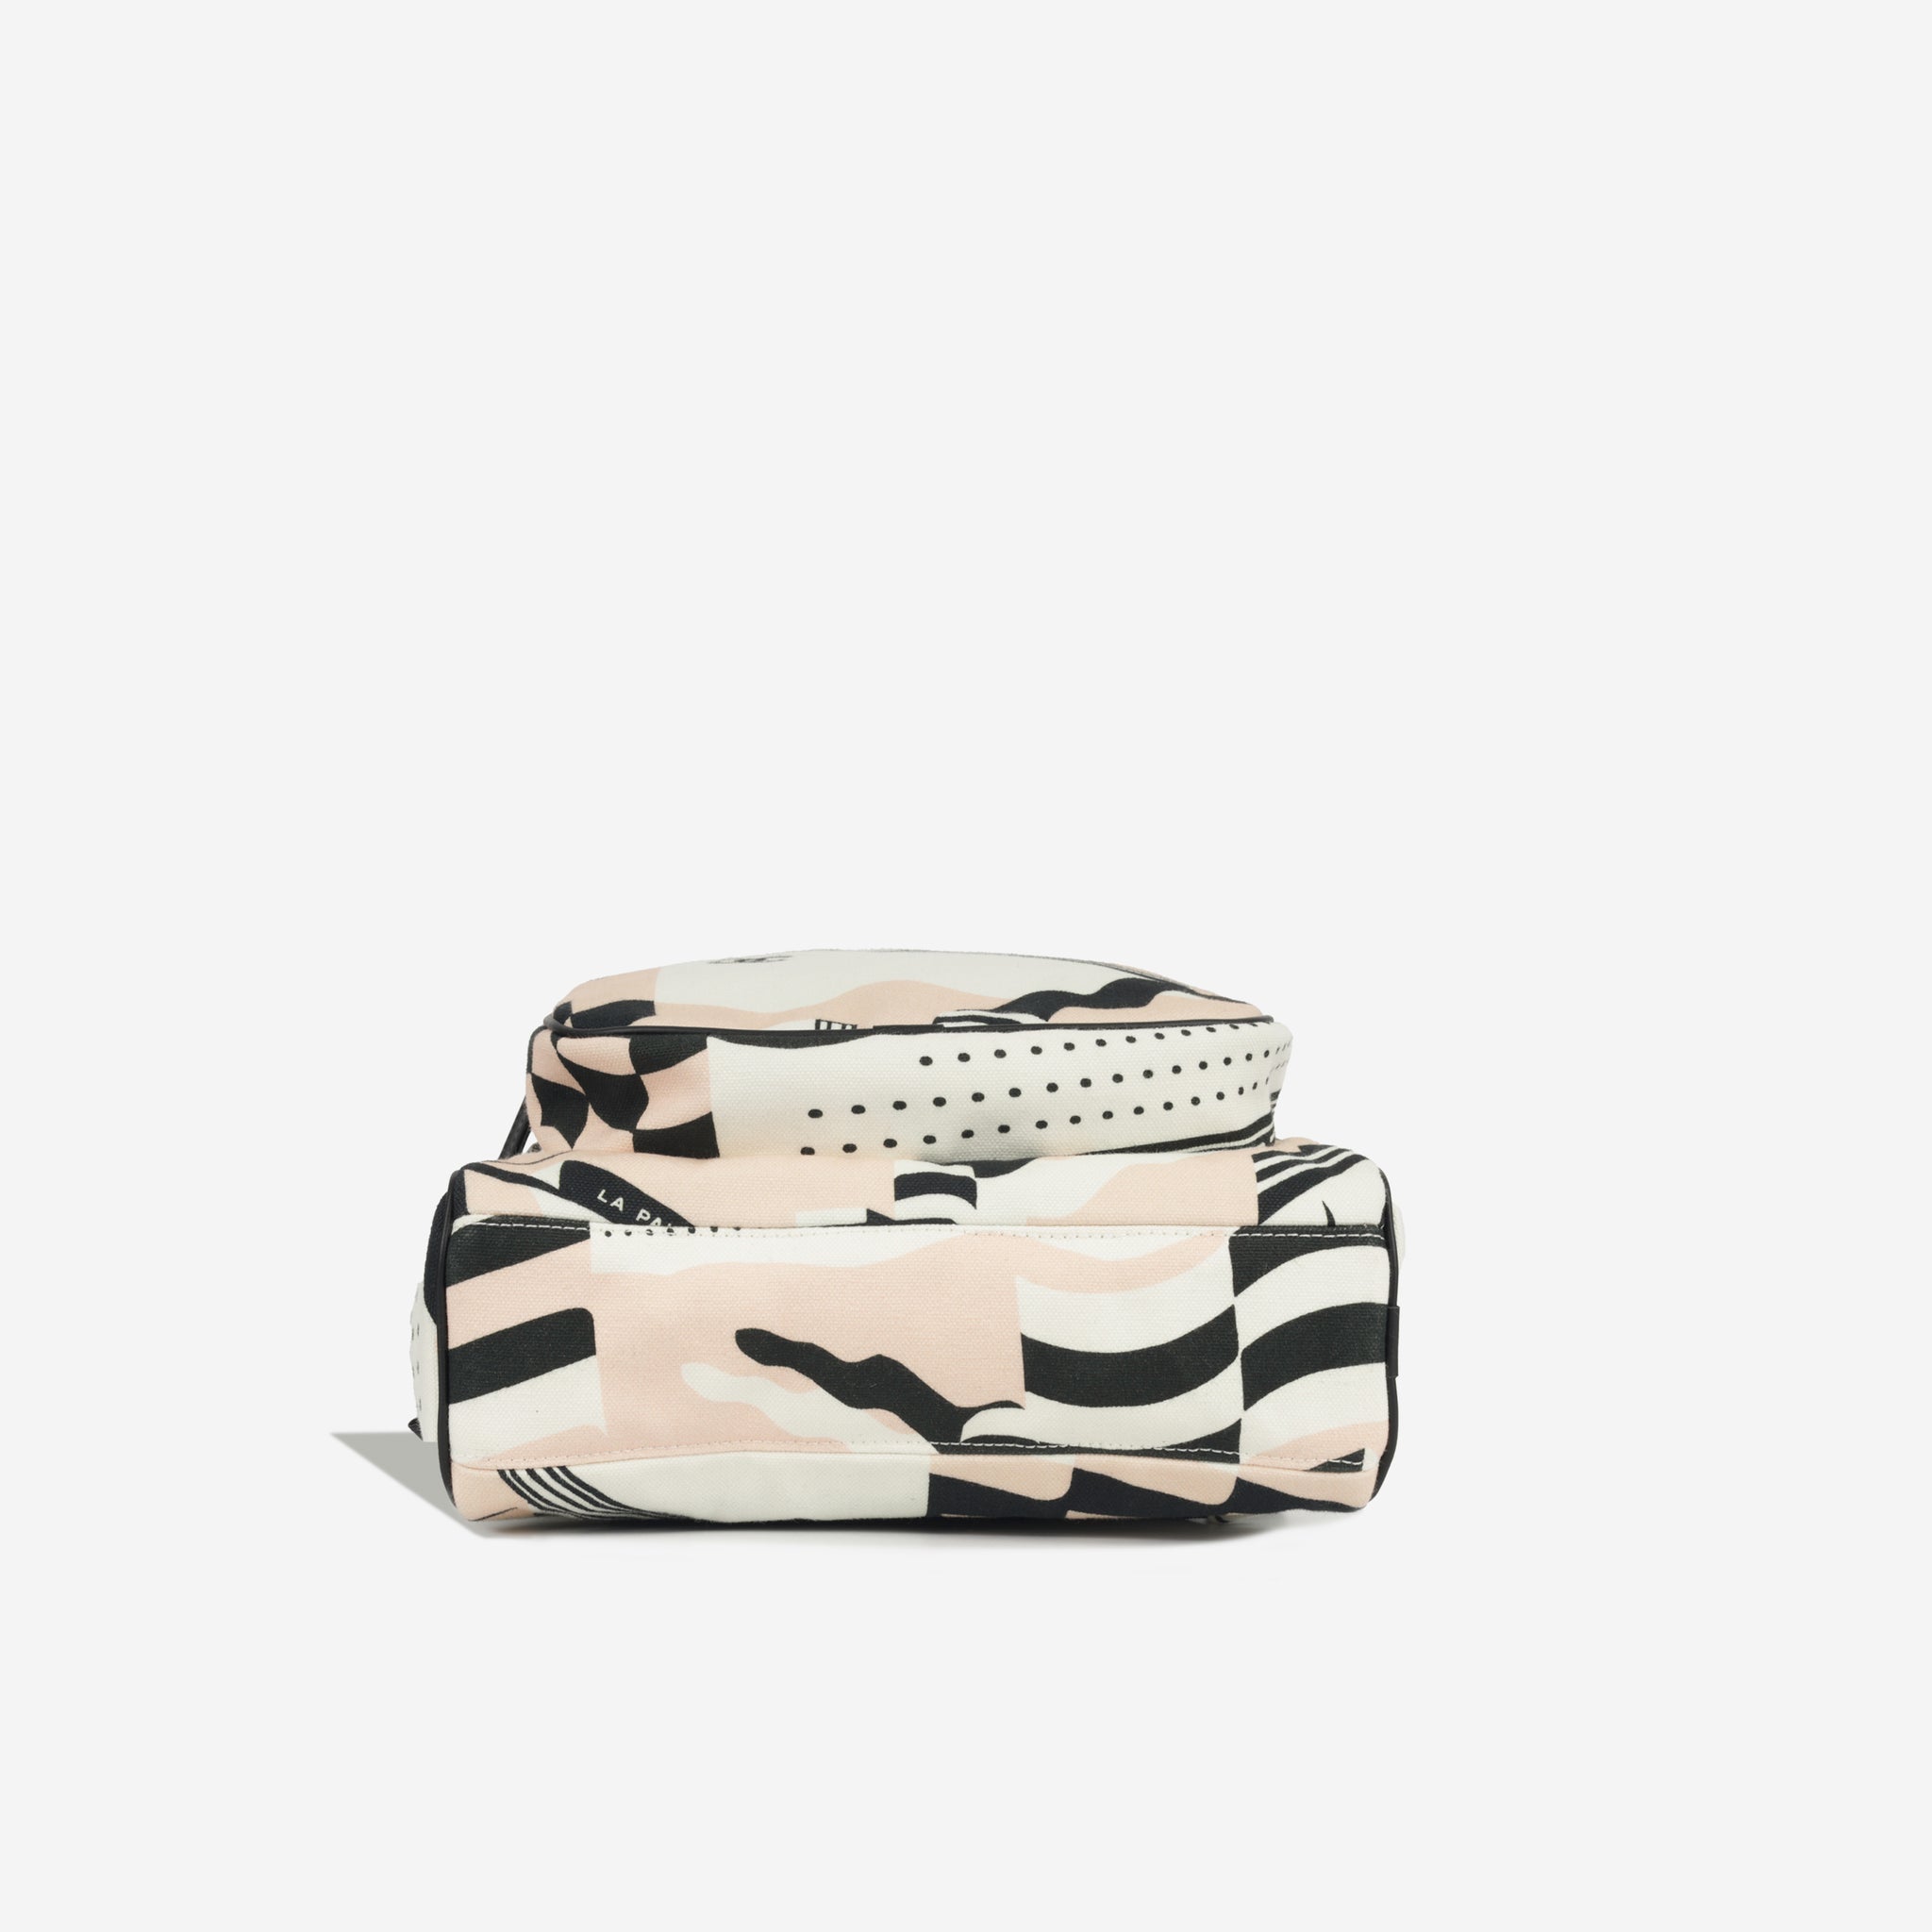 Chanel La Pausa Tote Purse Bag Canvas 2019 Cruise Collection Pink